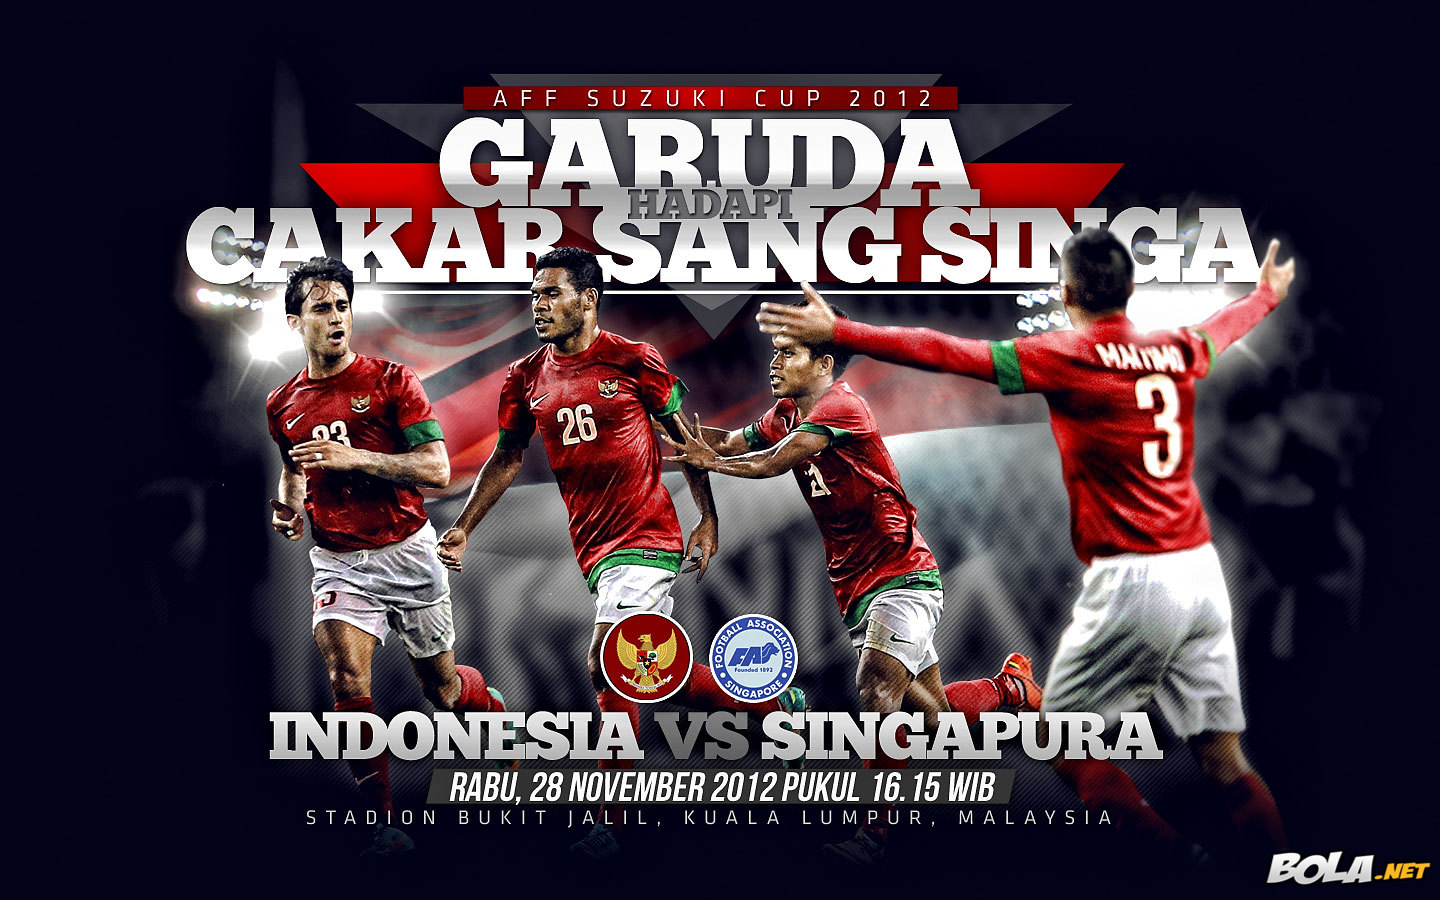 Deskripsi : Wallpaper Aff Cup: Indonesia Vs Singapura, size: 1440x900